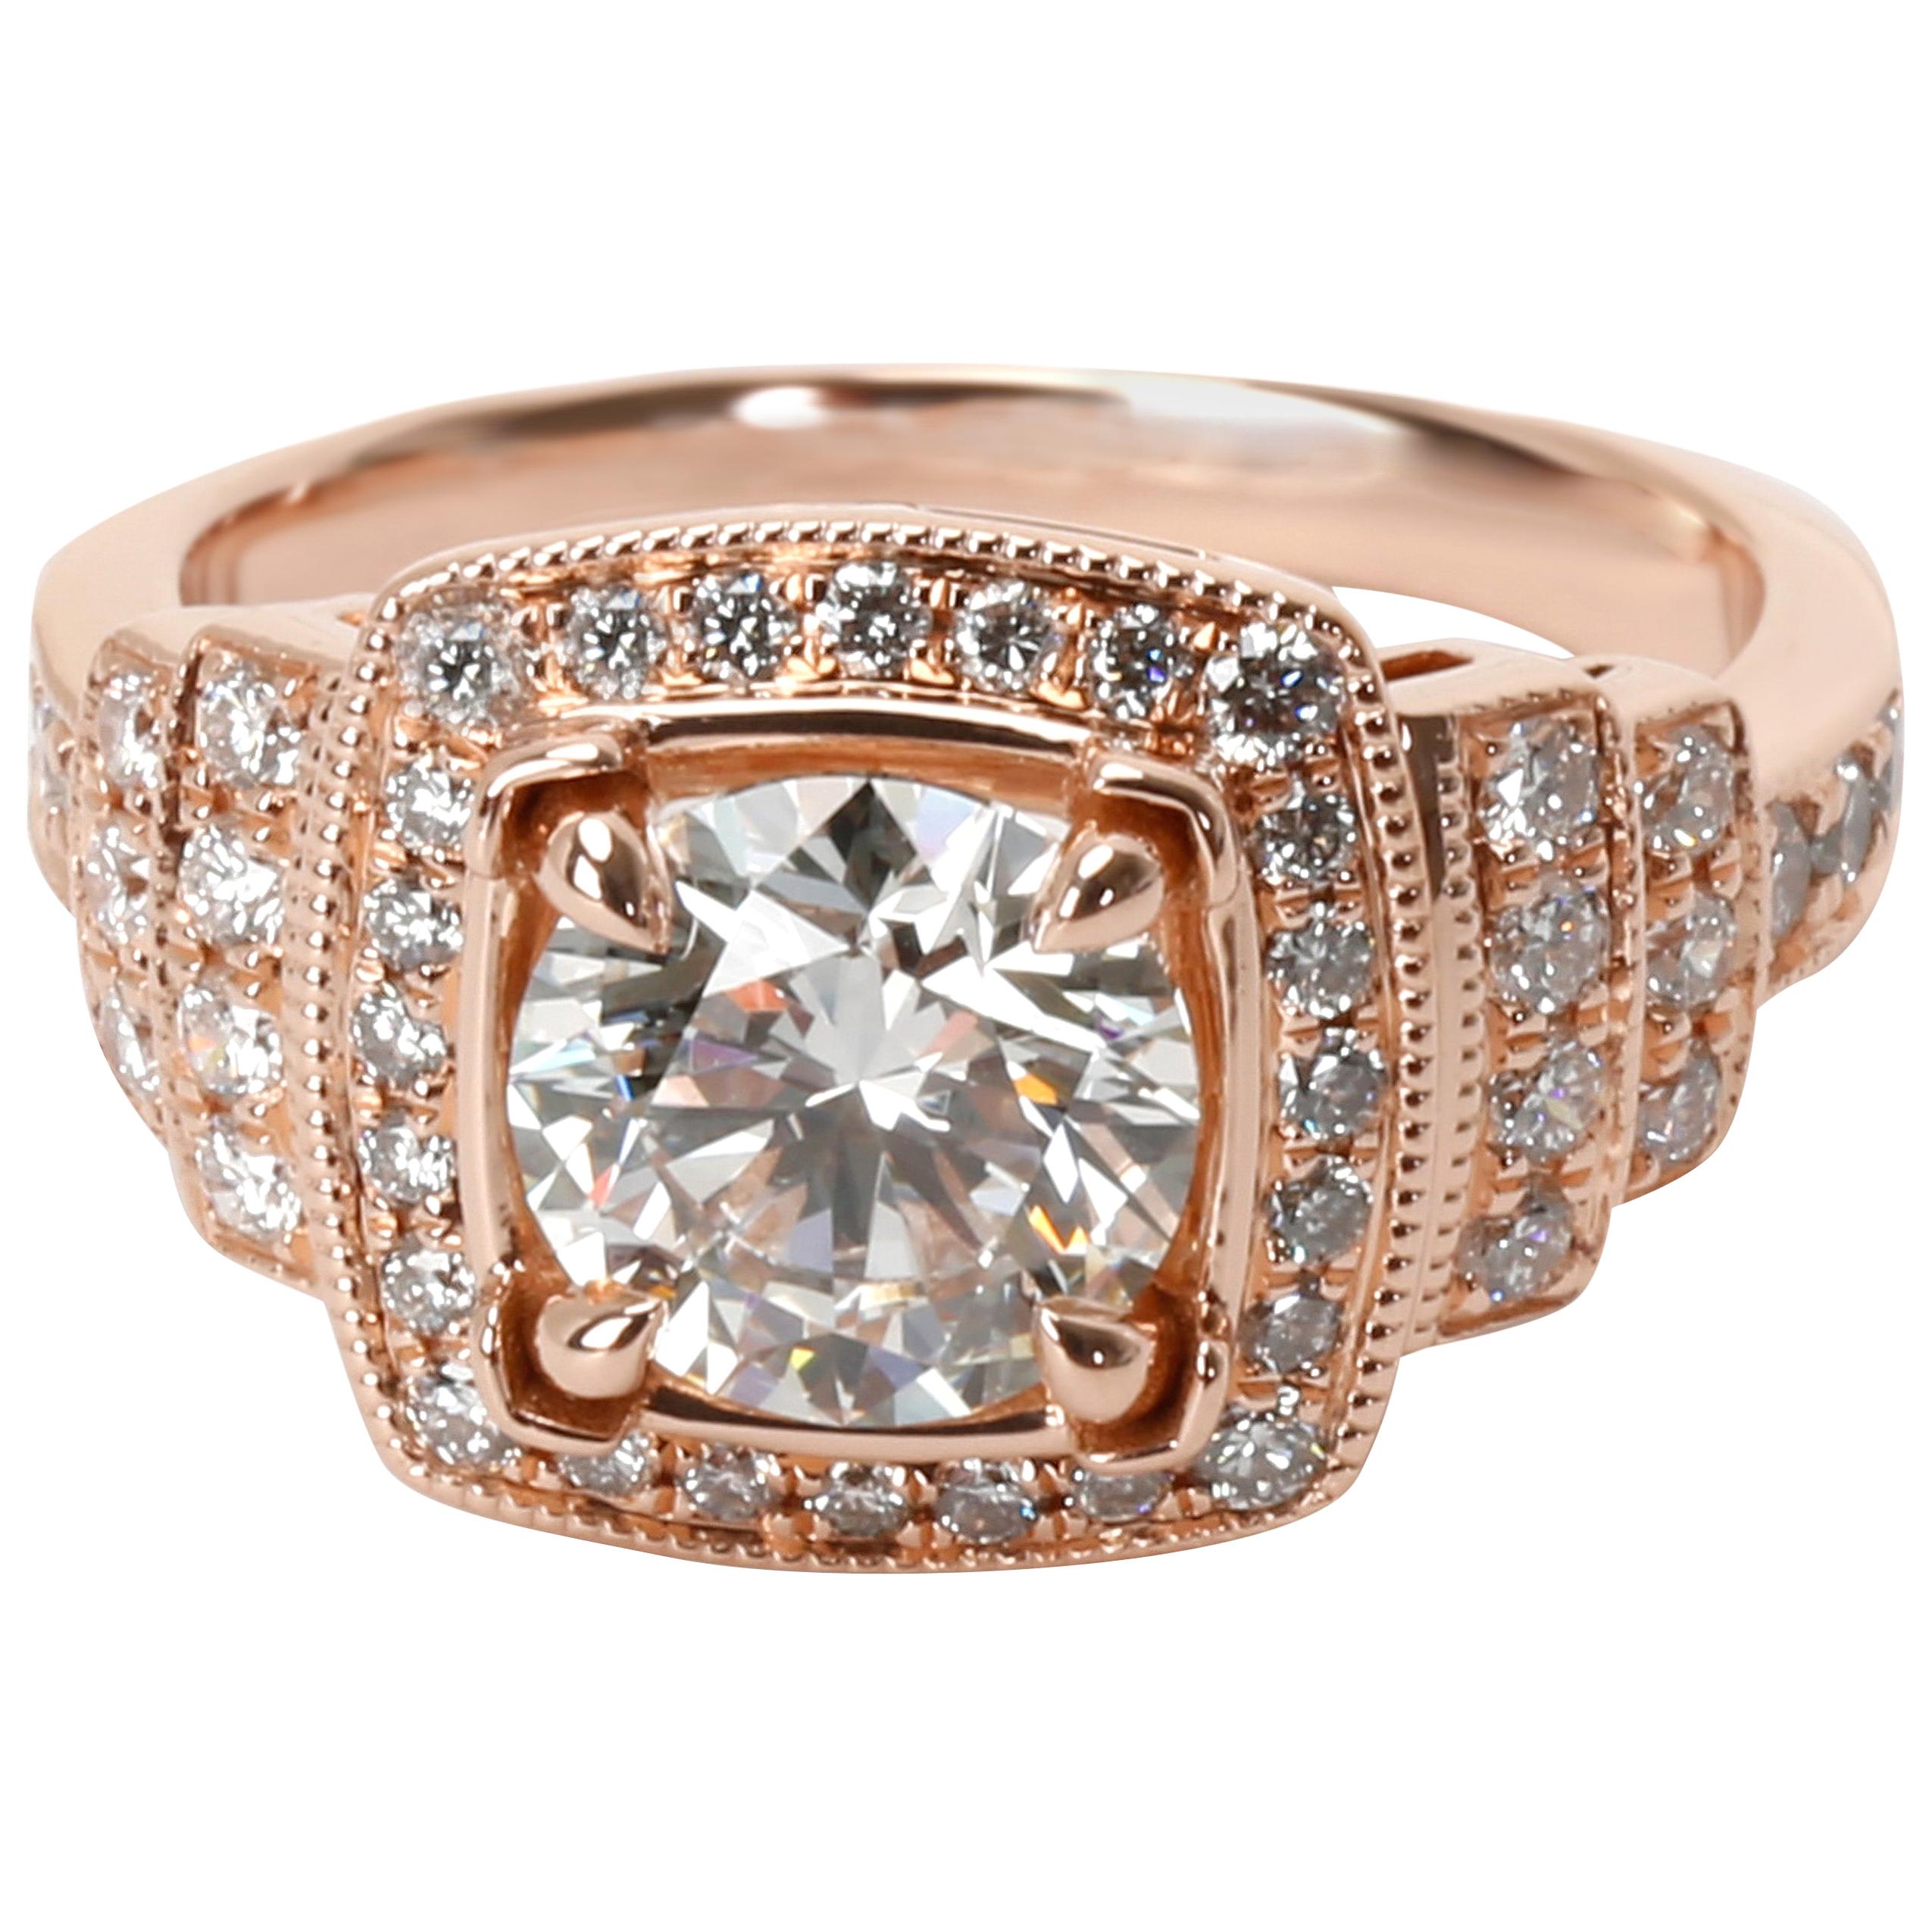 James Allen Halo Diamond Engagement Ring in 14k Rose Gold GIA F VVS2 1.25 Carat